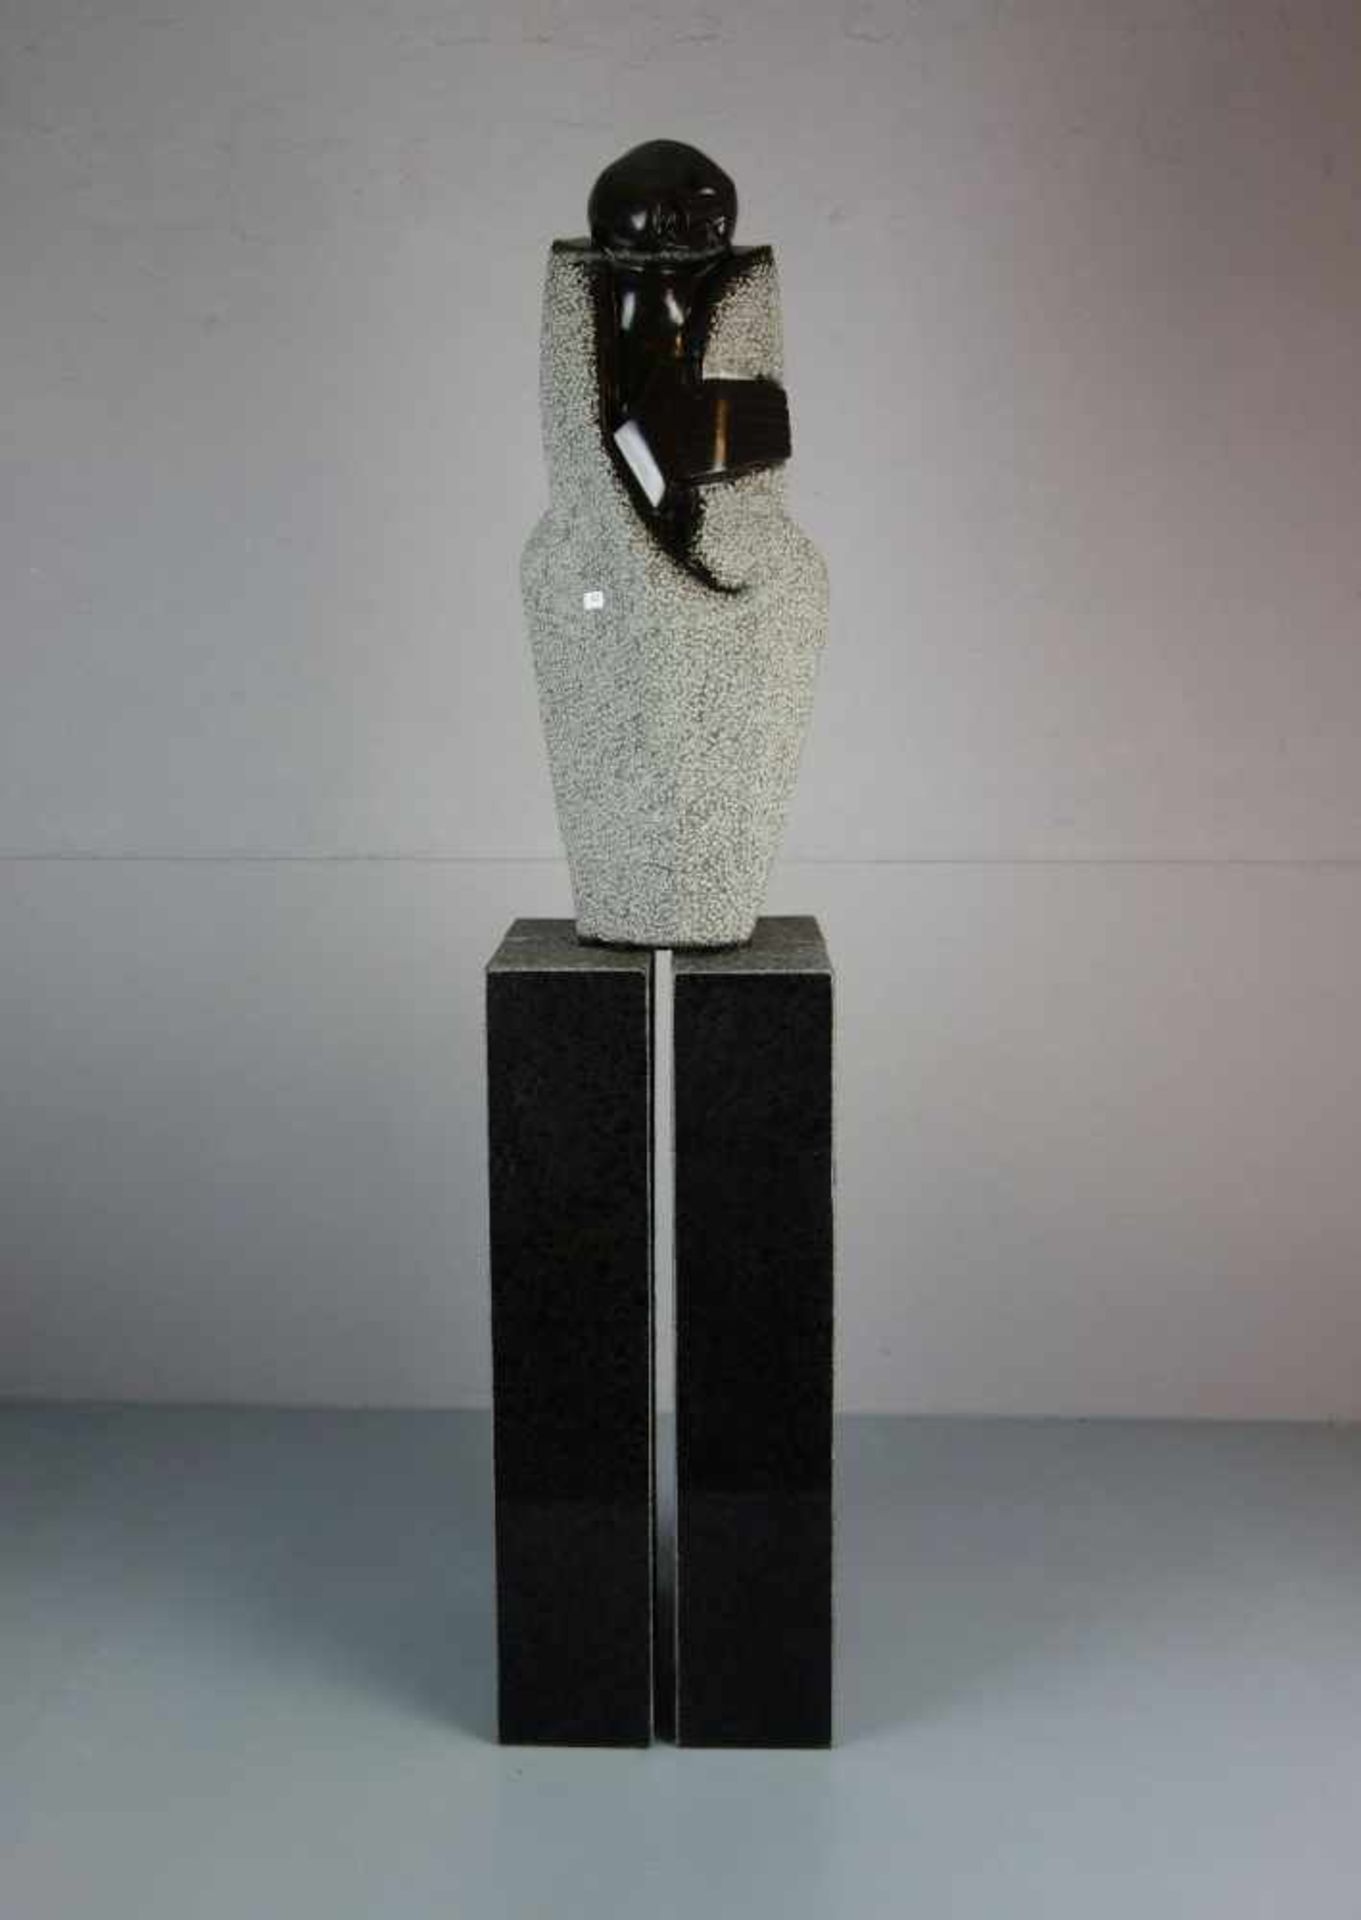 MODERNE SKULPTUR - KANYEMBA, DENNY (geb. 1973 in Chitungwiza / Simbabwe), Skulptur / sculpture: "